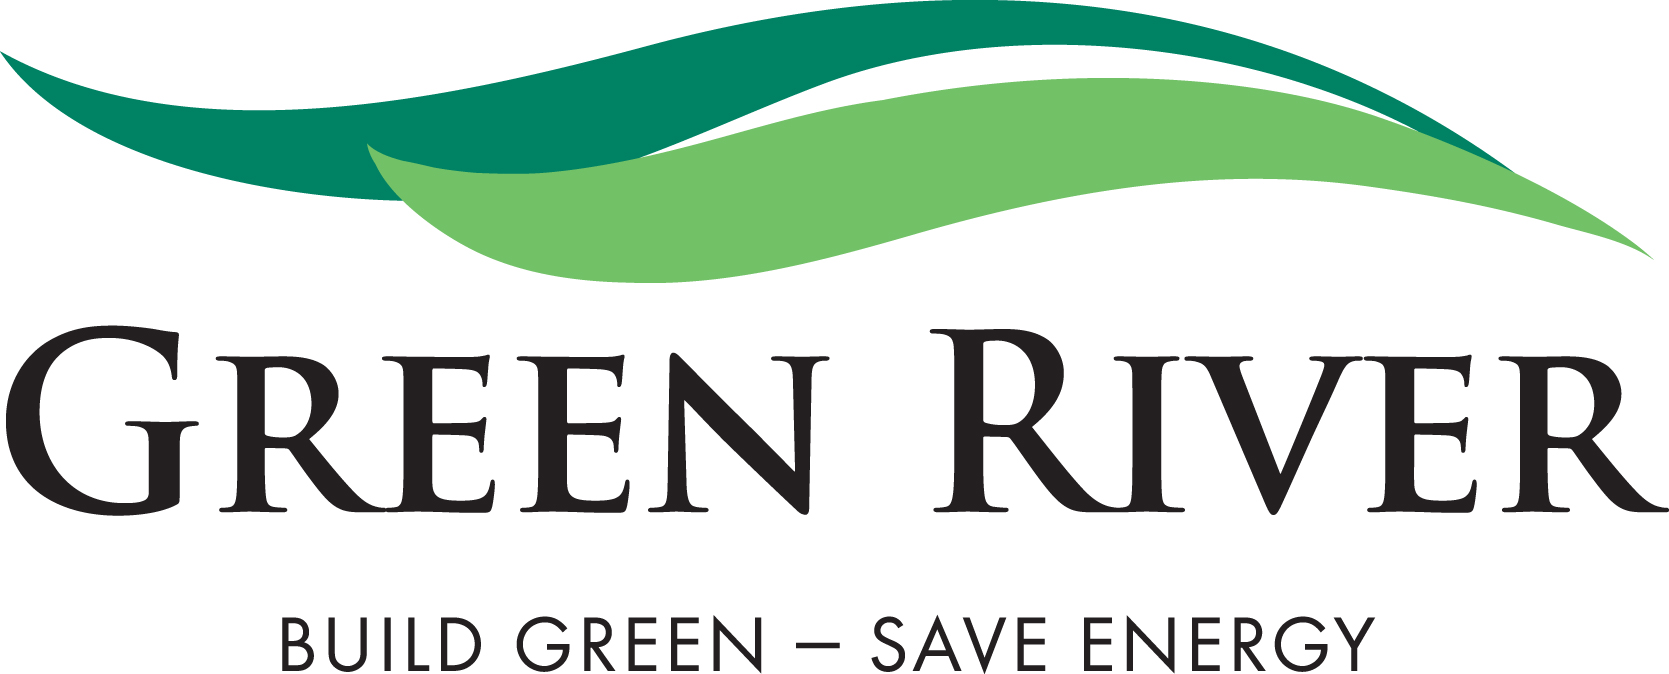 Green River LLC company logo